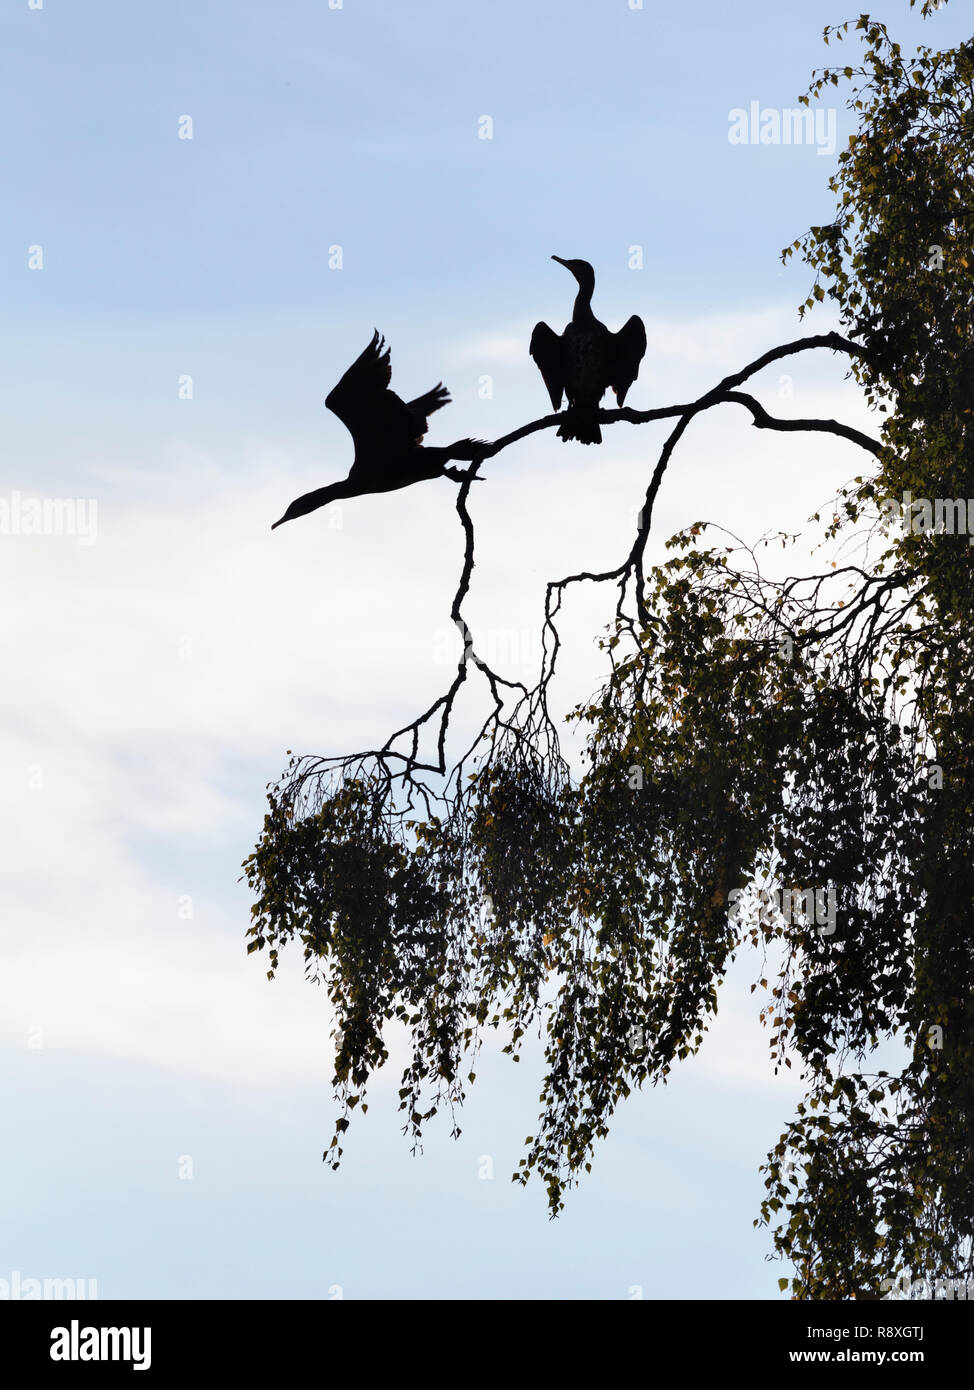 Paire de Grands Cormorans perchés dans un arbre avec un juste de s'envoler Banque D'Images